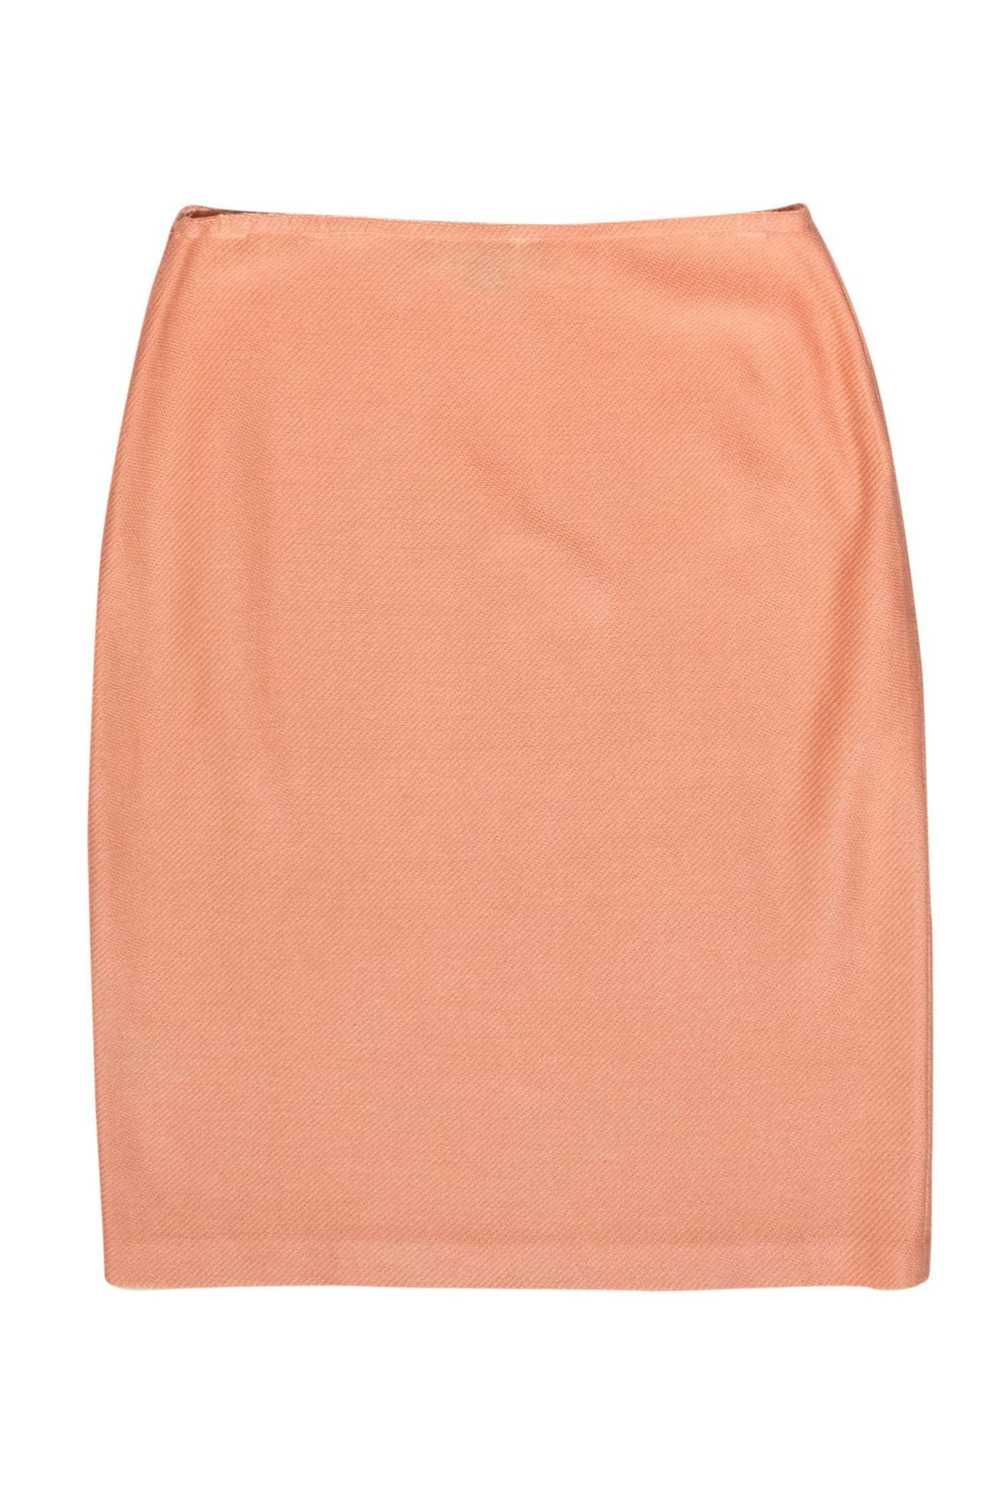 St. John - Peach Woven Pencil Skirt Sz 6 - image 2